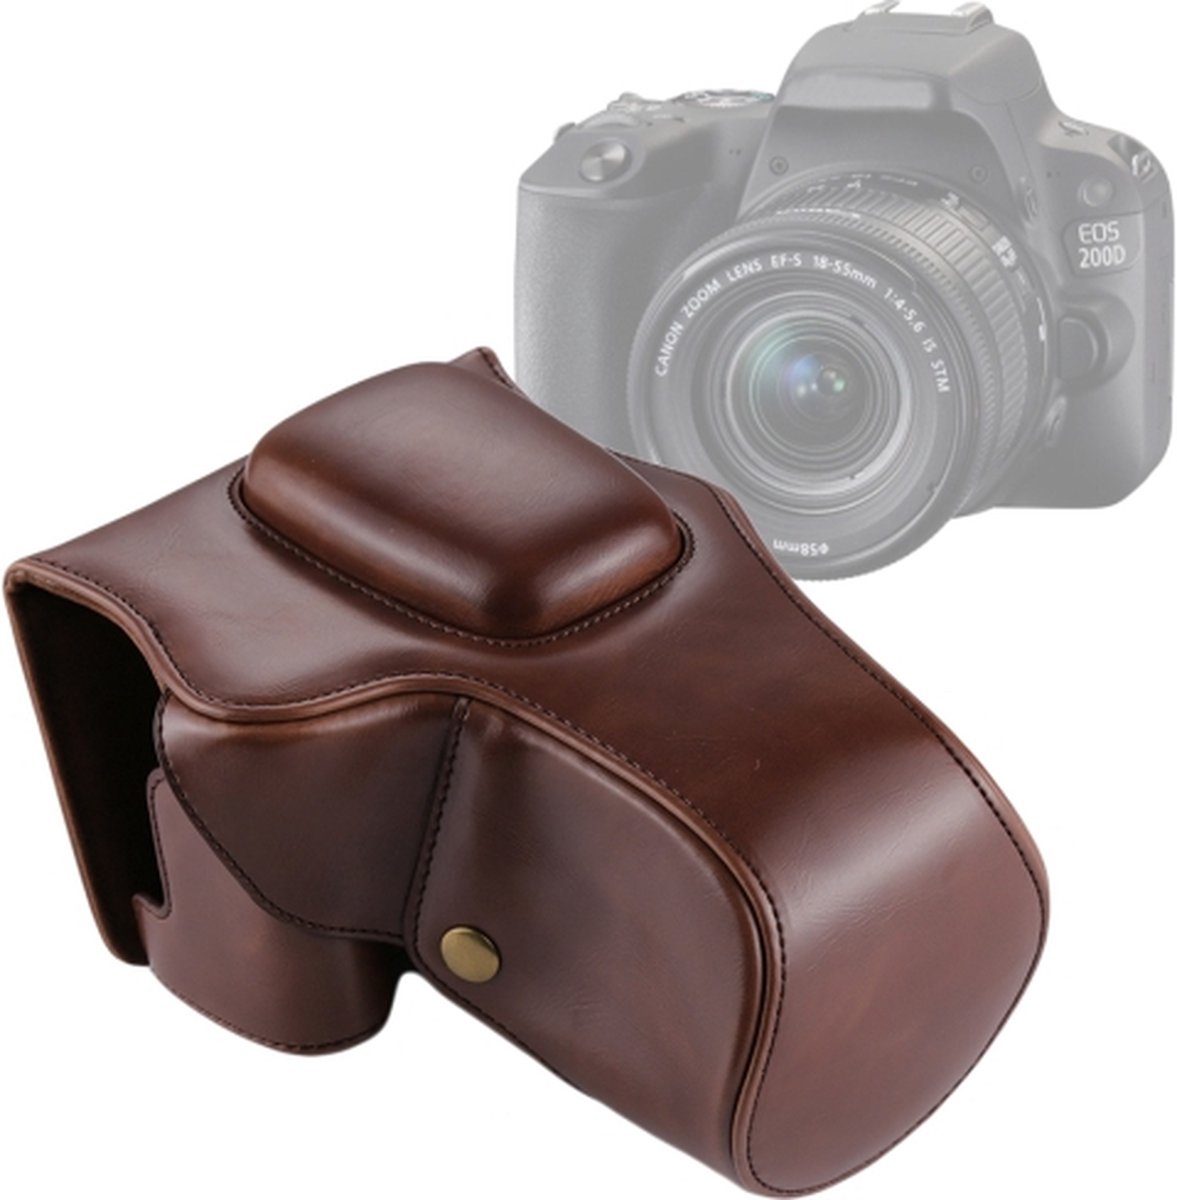 Full Body Camera PU lederen tas tas voor Canon EOS 200D (18-55mm lens) (koffie) - Merkloos